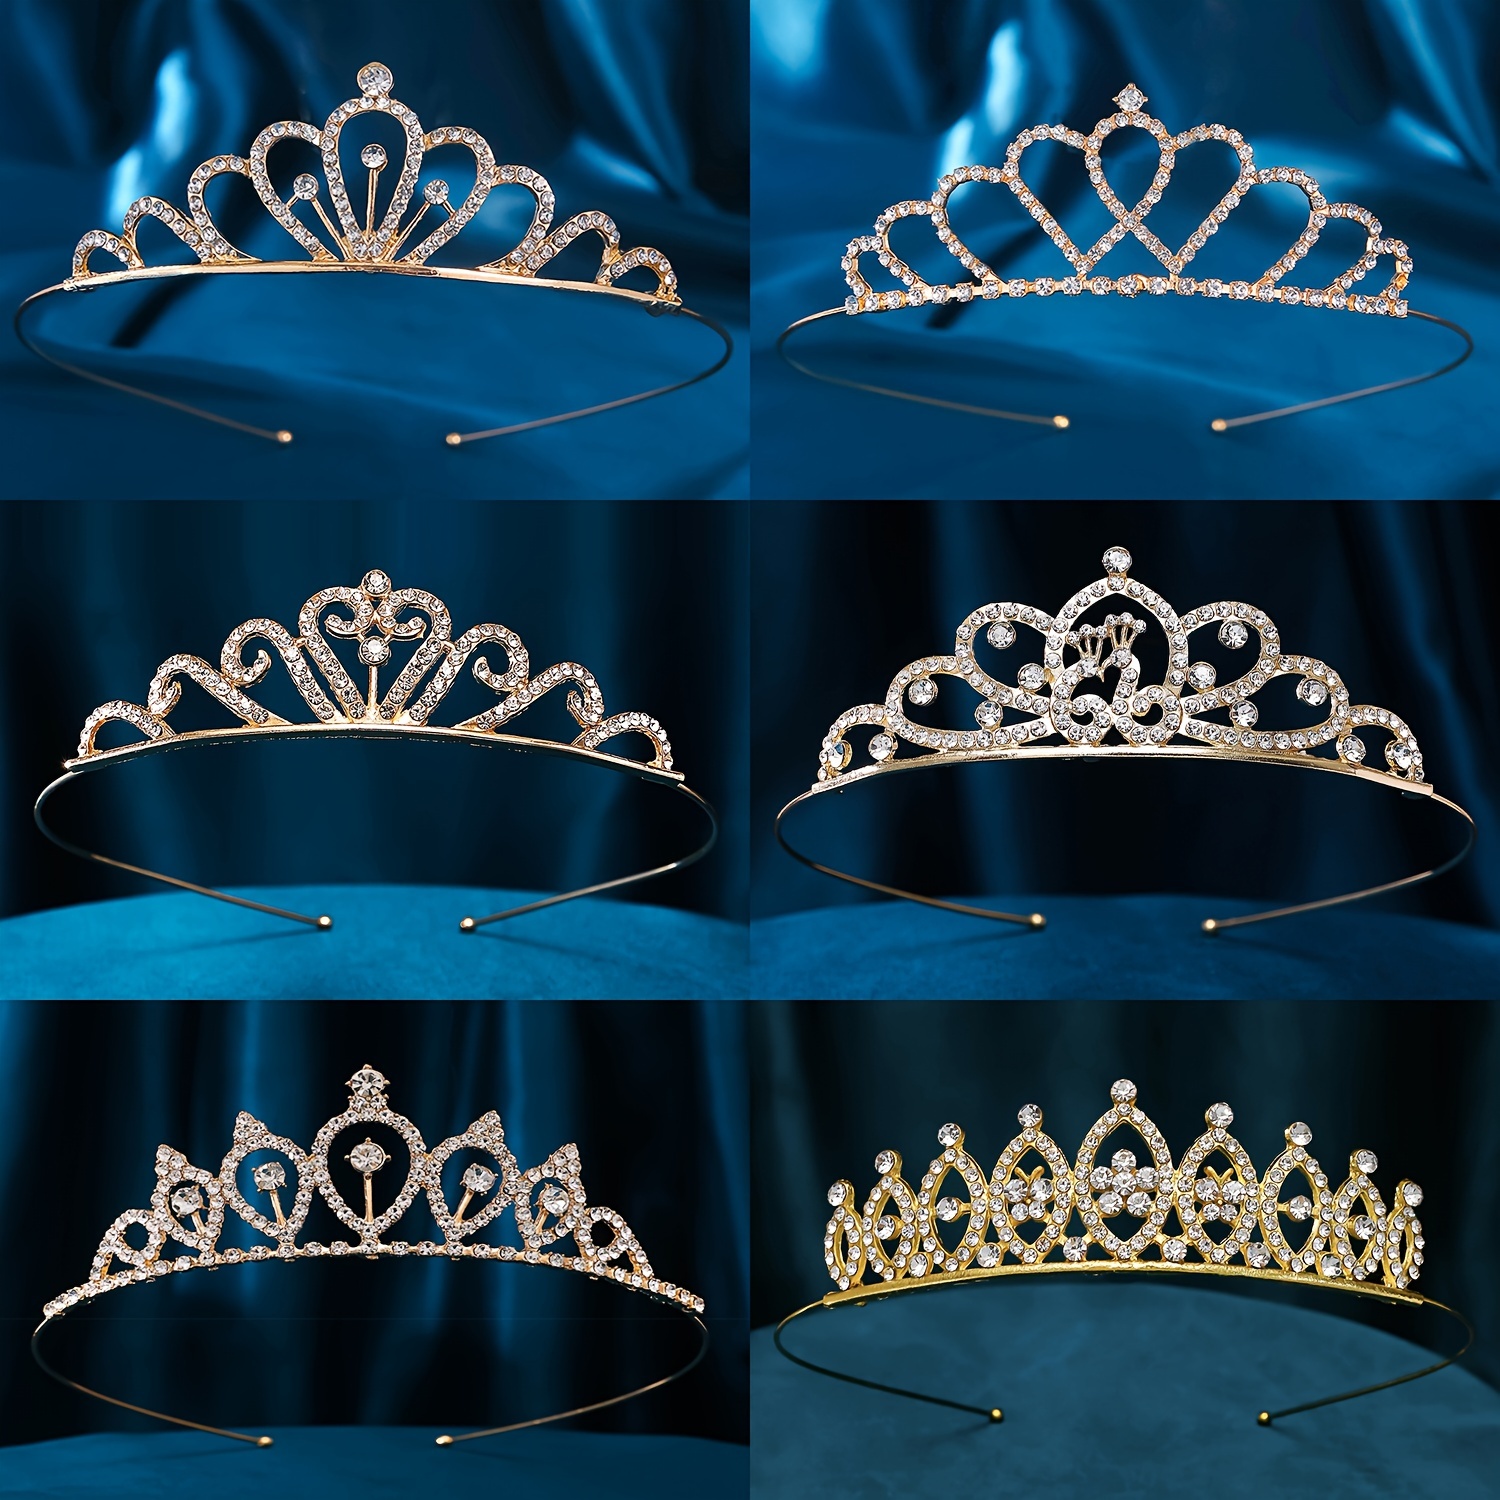 Mini Tiara Crown for Newborn Baby Photo Prop Crystal Pink Girl Crowns Round